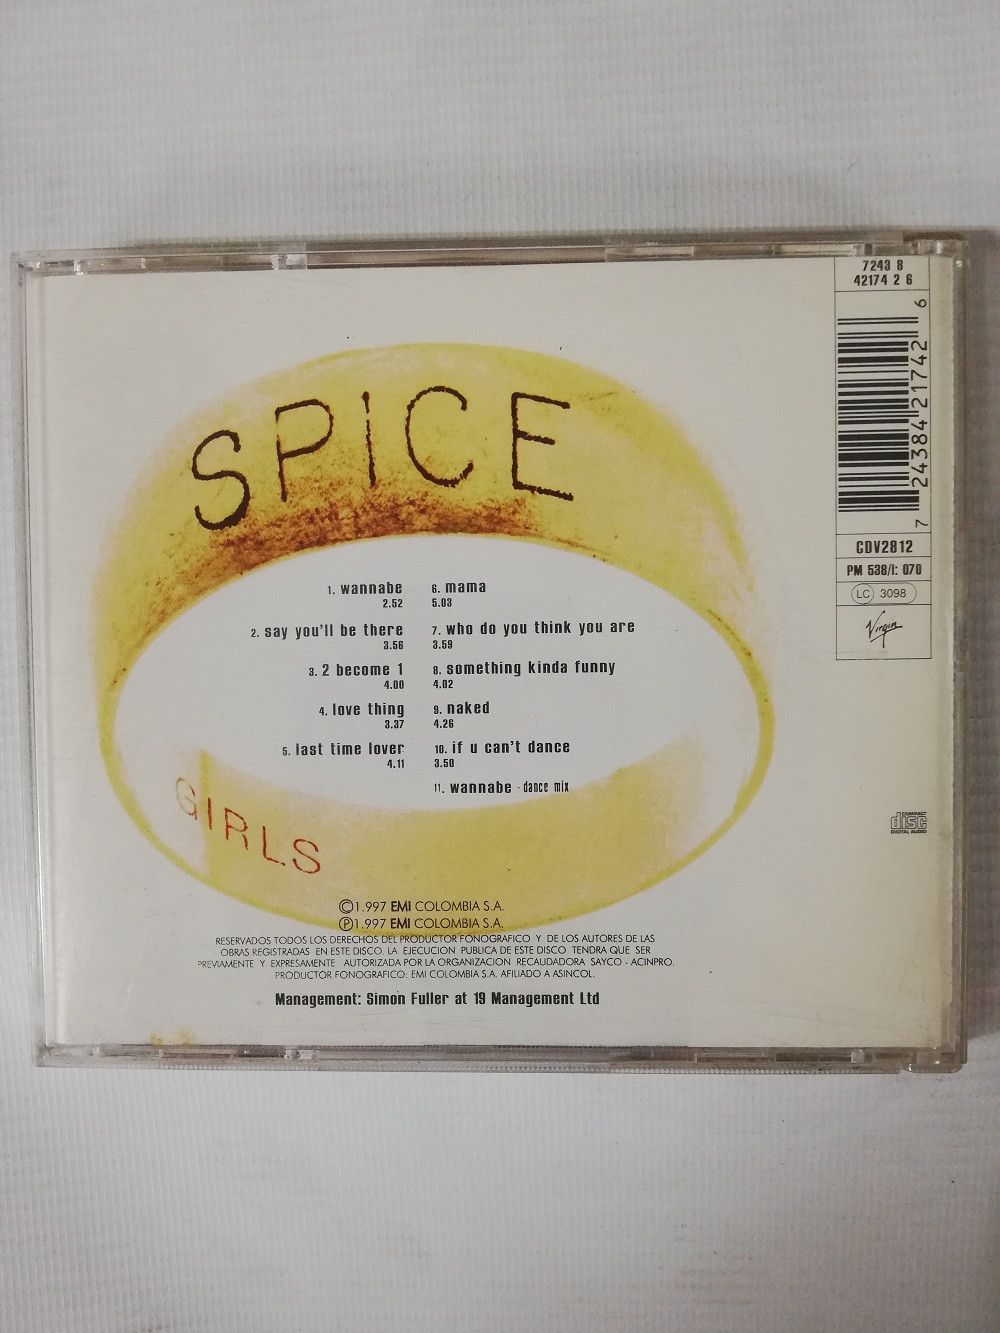 Imagen CD SPICE GIRLS - SPICE 2